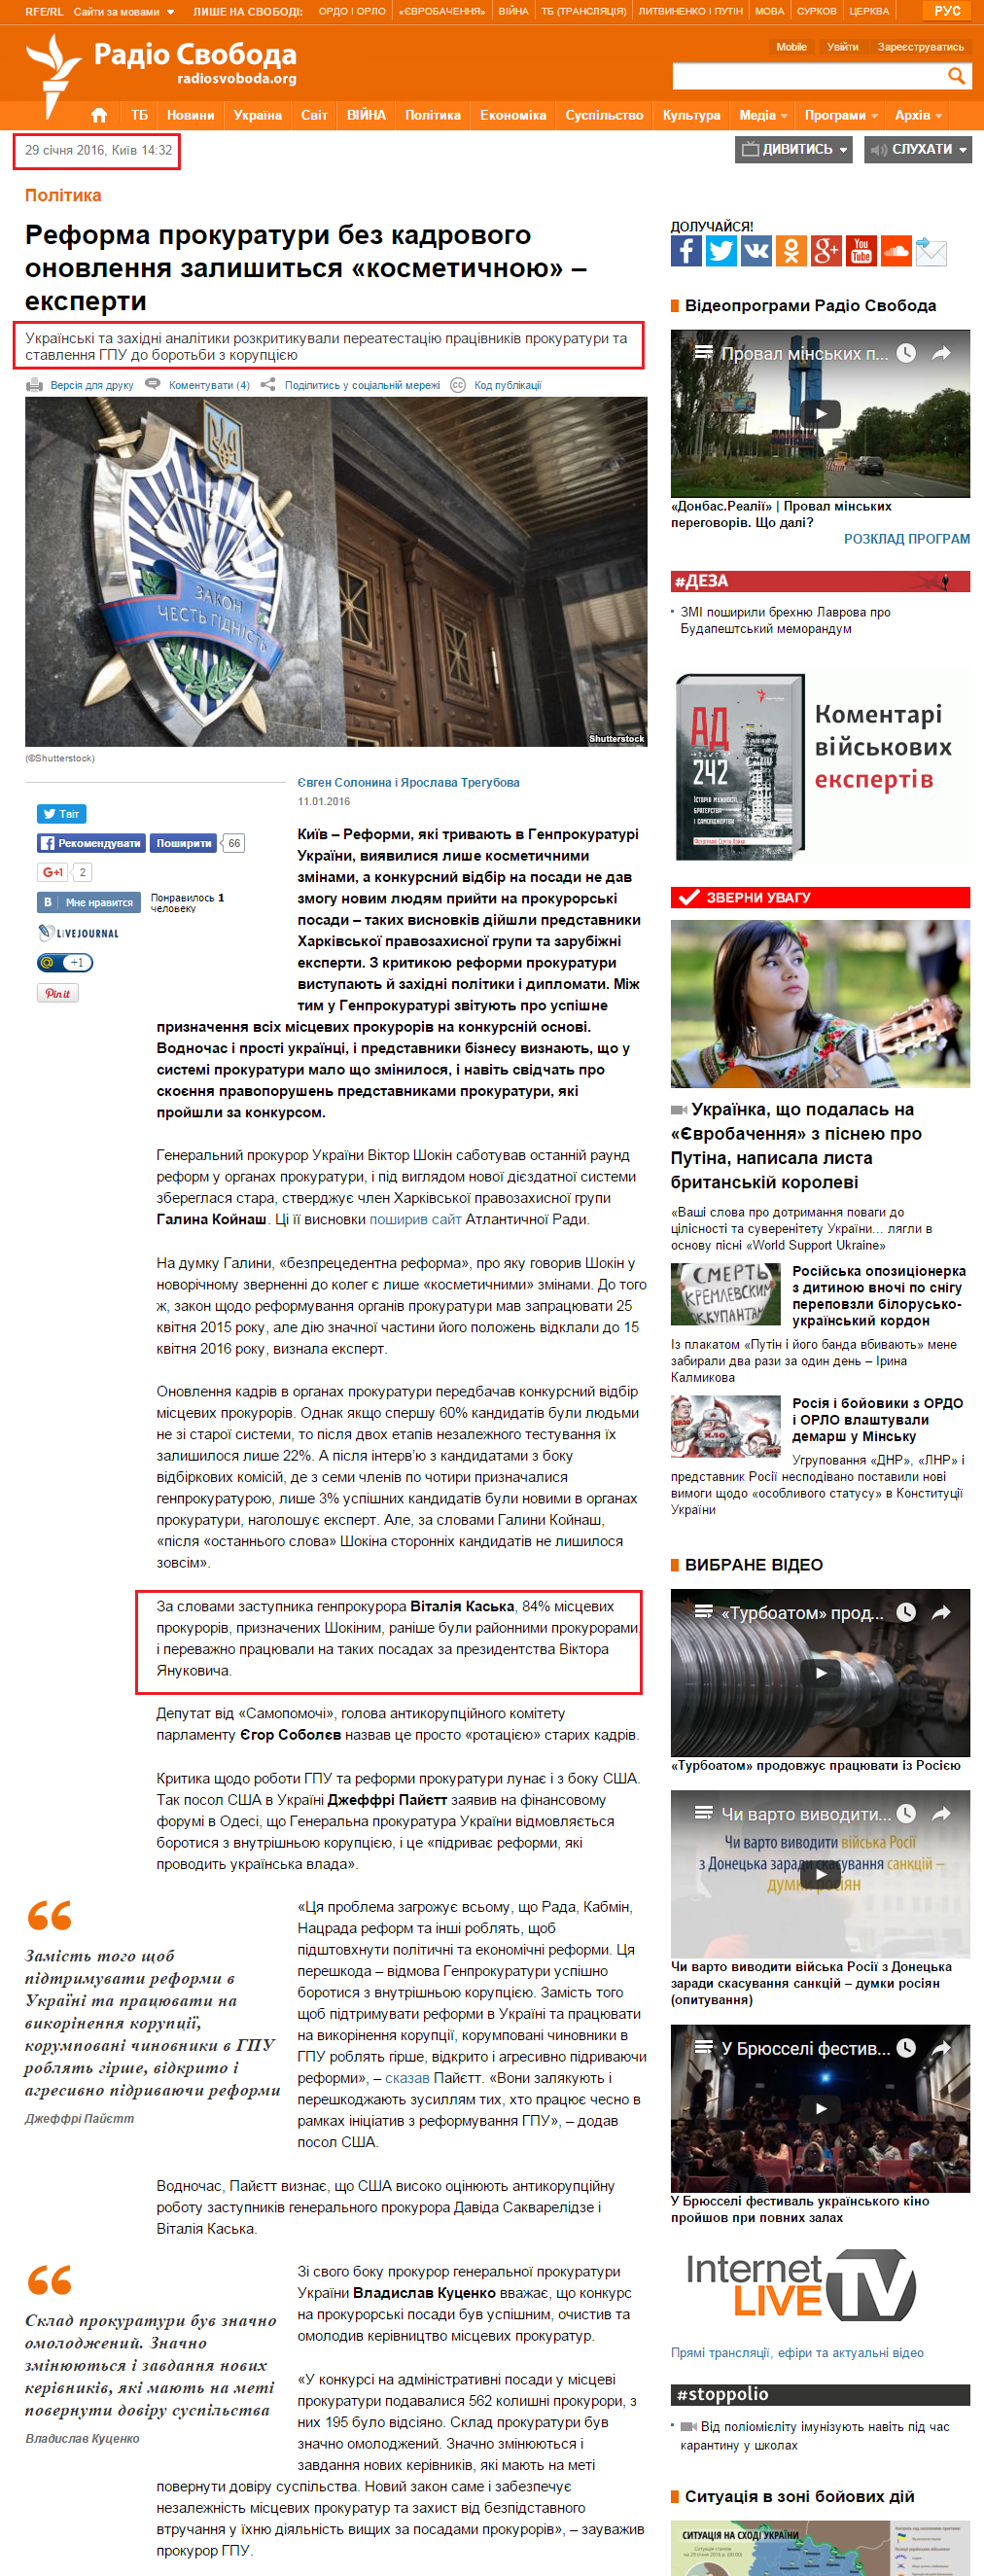 http://www.radiosvoboda.org/content/article/27481016.html